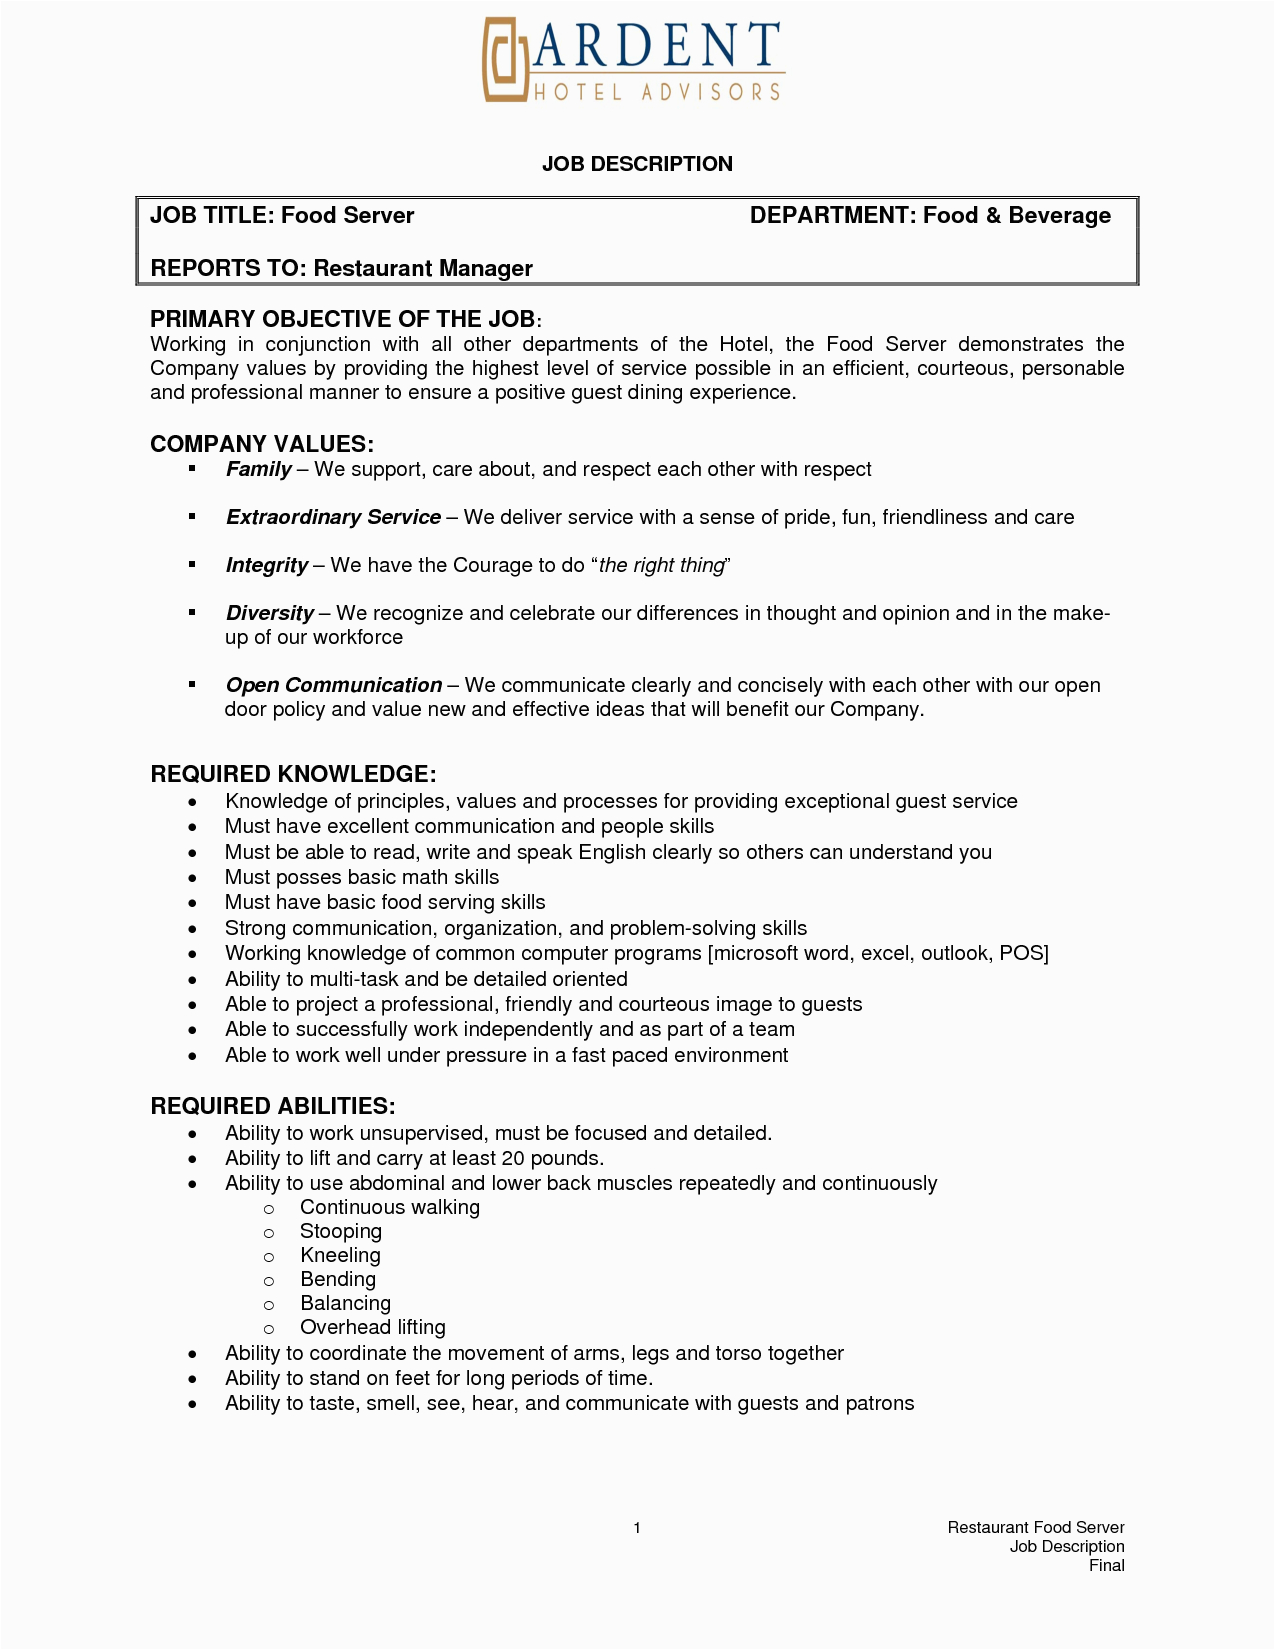 Detailed Resume Sample with Job Description Banquet Server Resume Examplecareer Resume Template